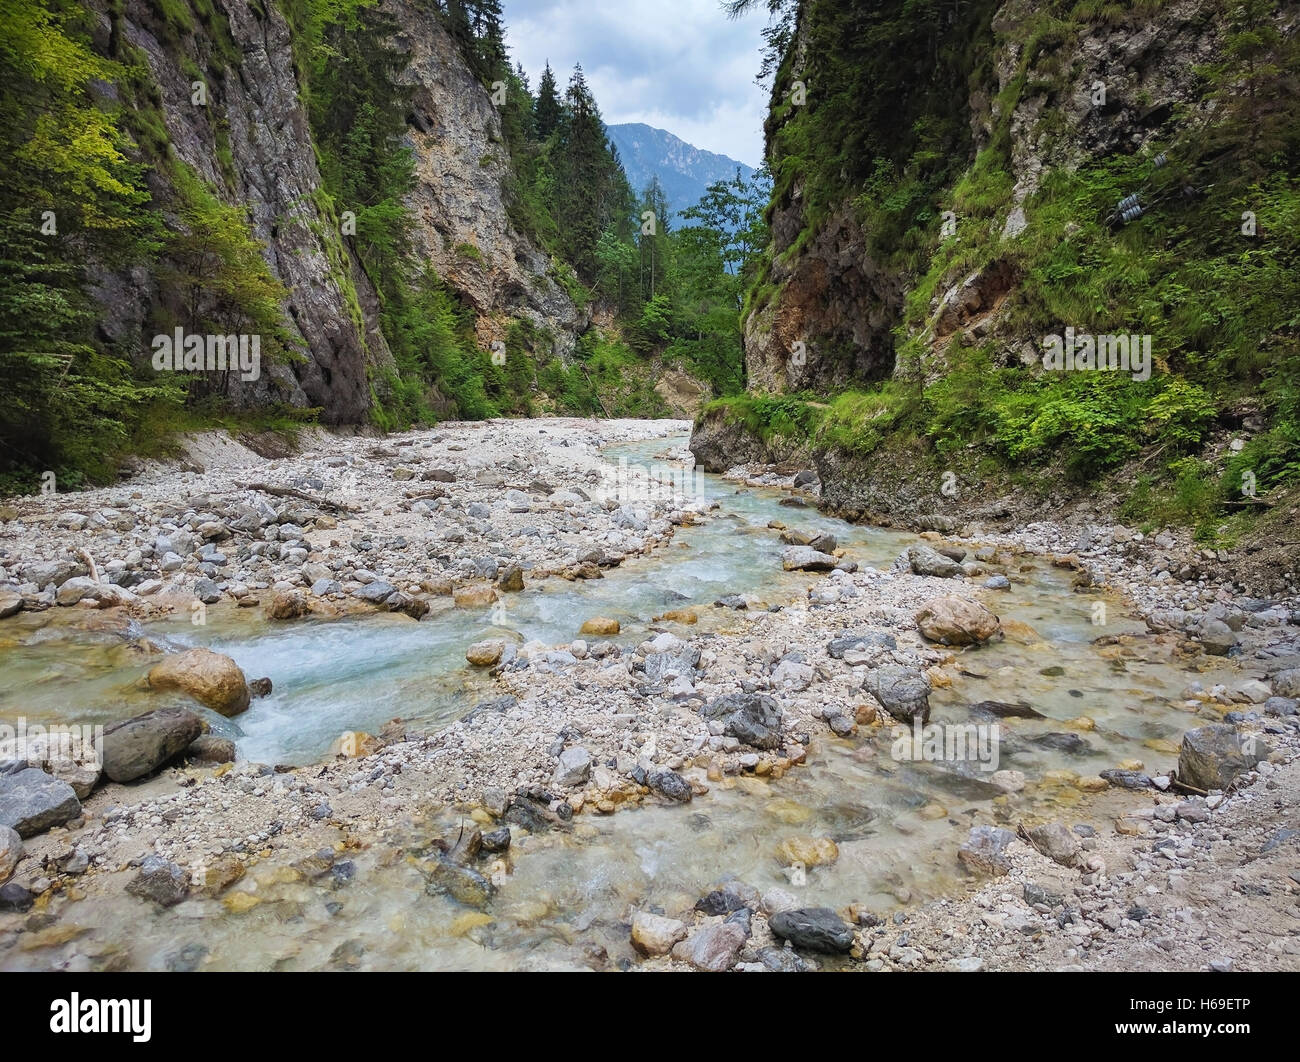 Hiking trail near Martuljek river in Slovenia Stock Photo